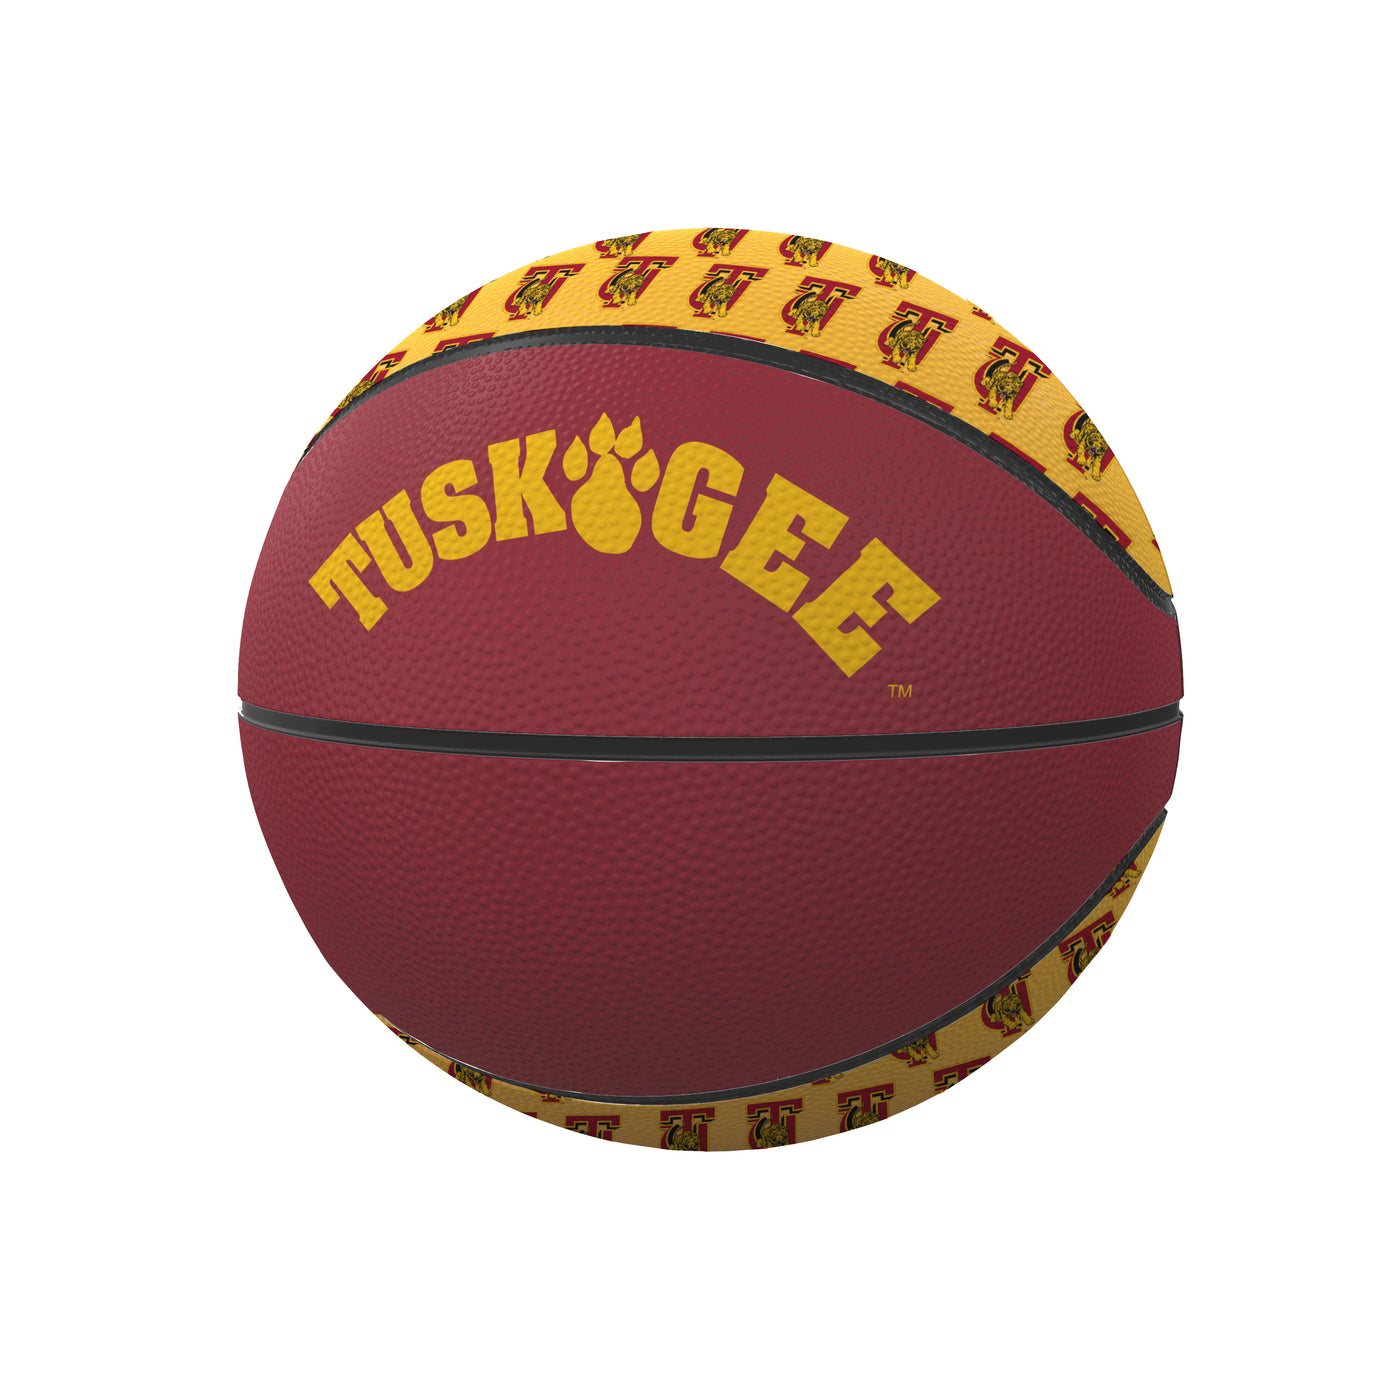 Tuskegee Mini Size Rubber Basketball